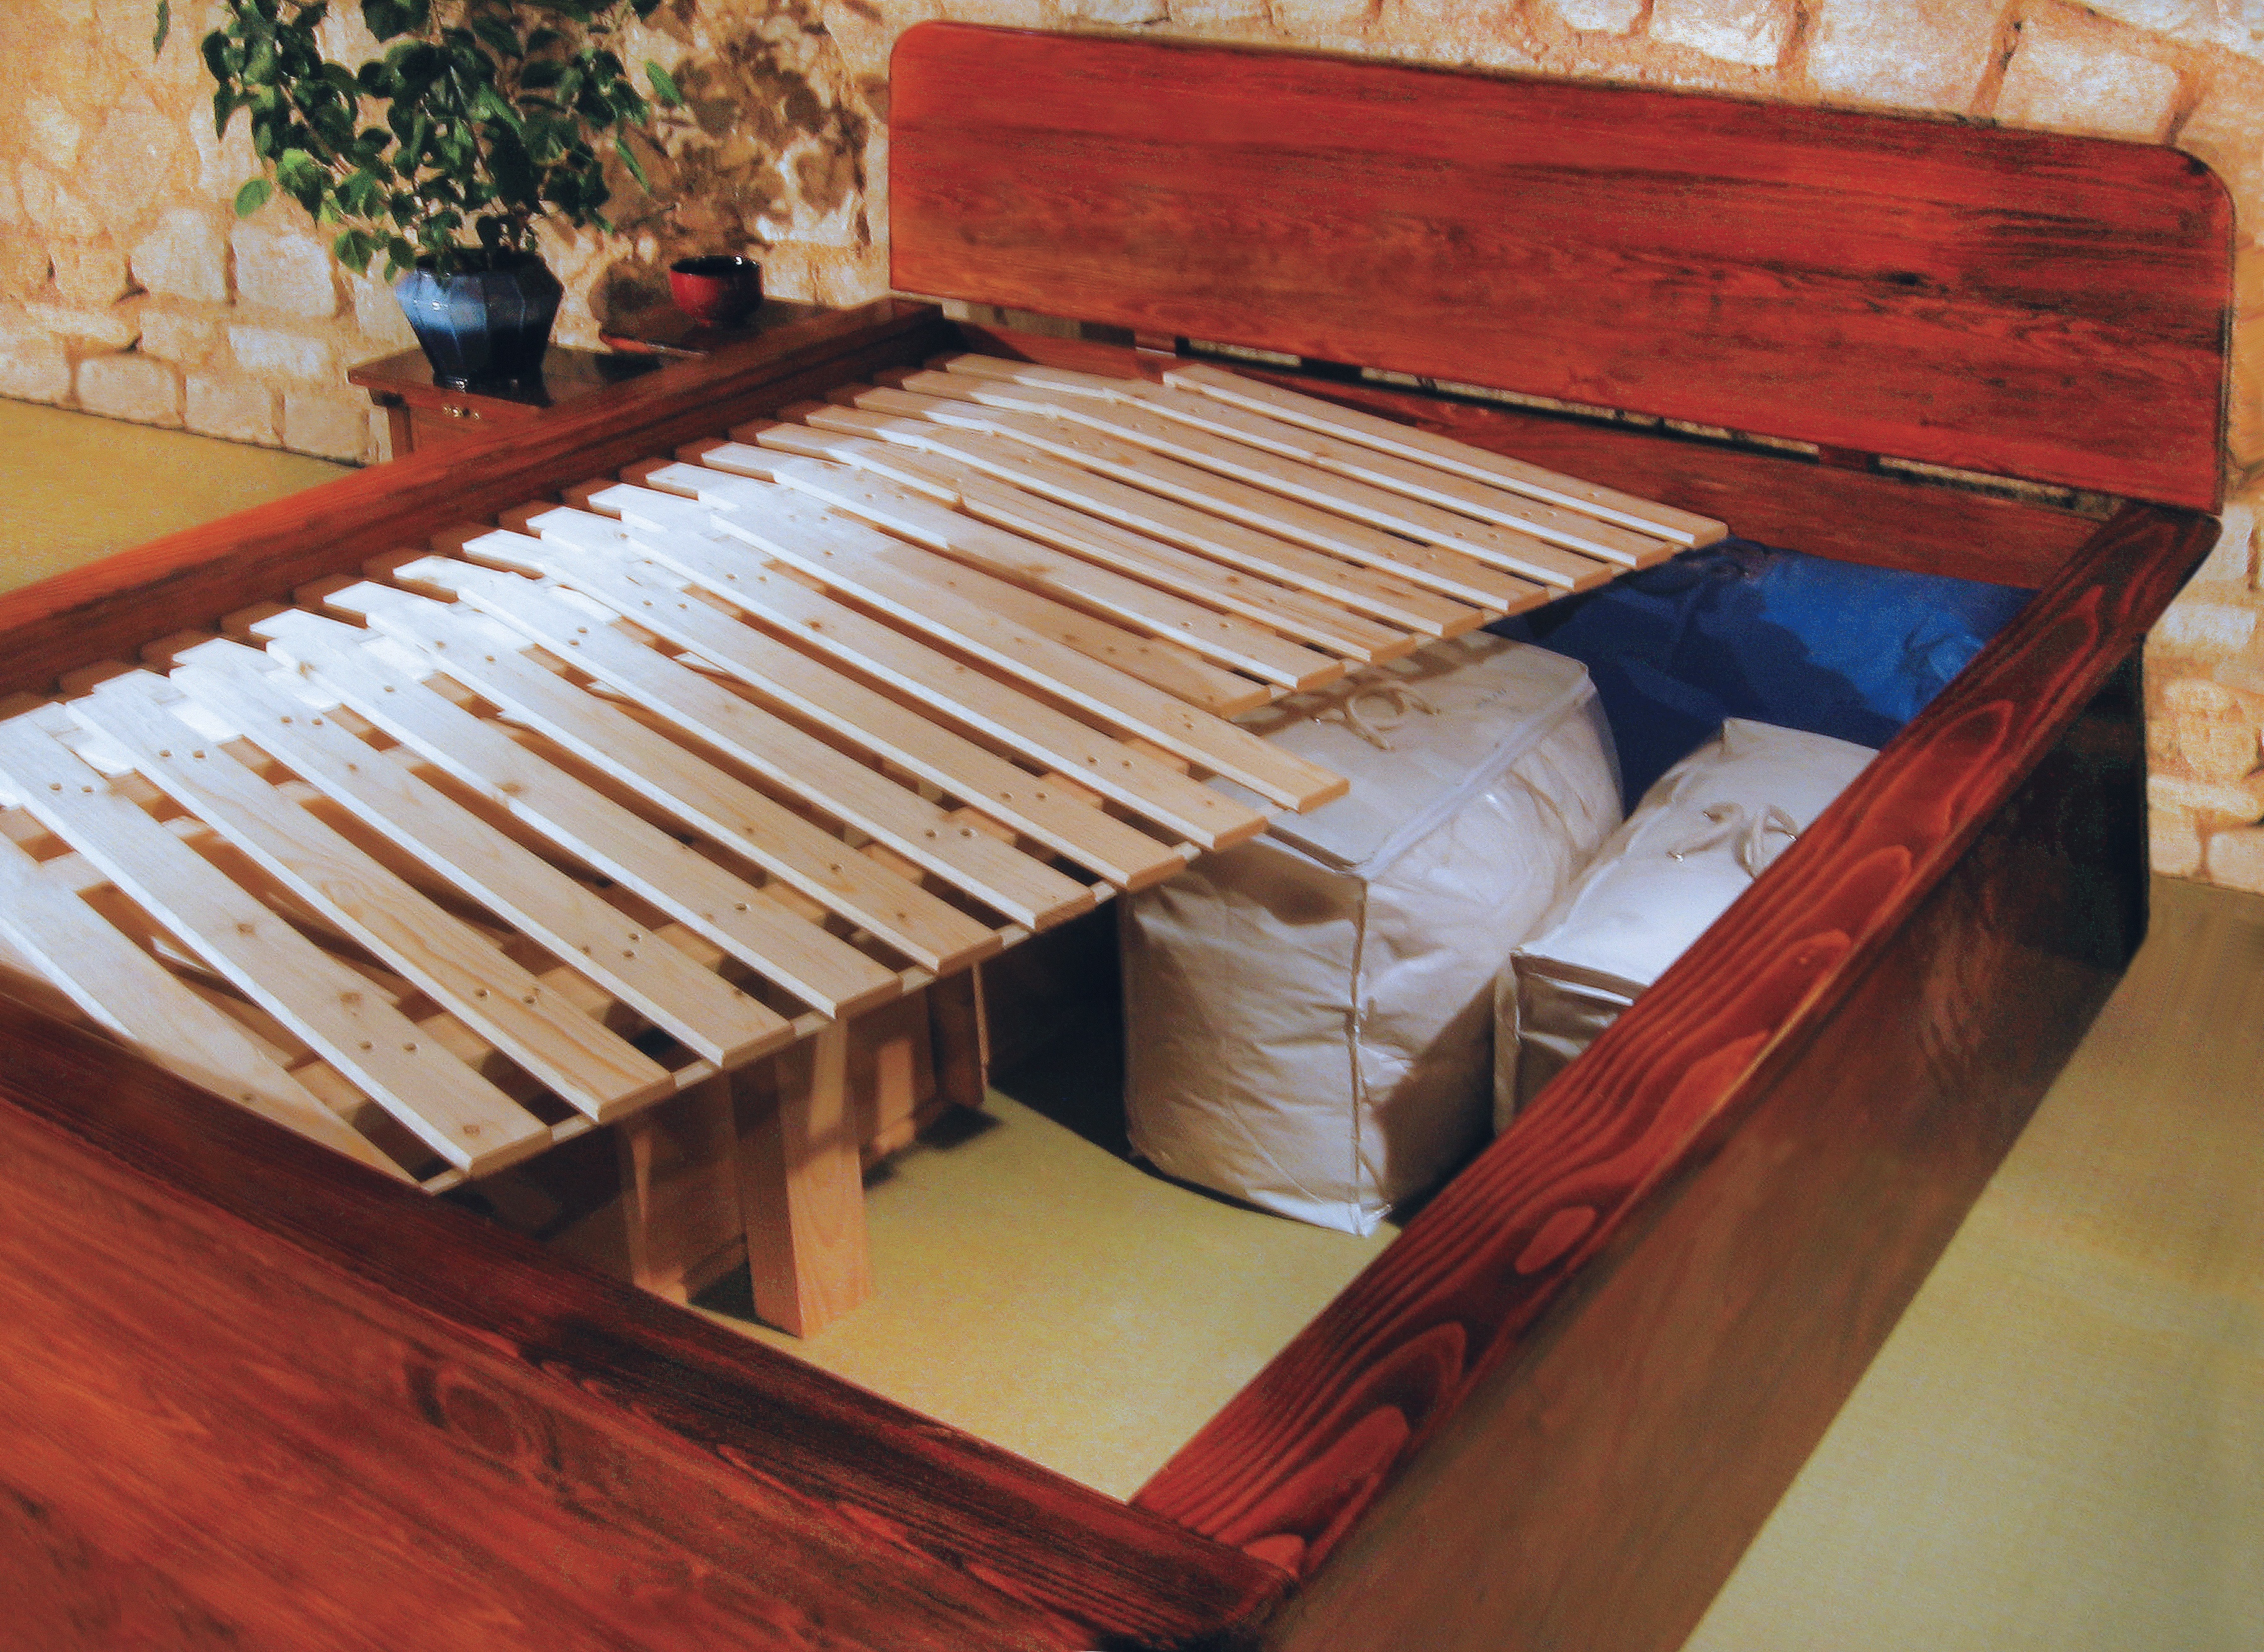 Lit rangement avec tiroir sous lit Megumi - Fabrication artisanale